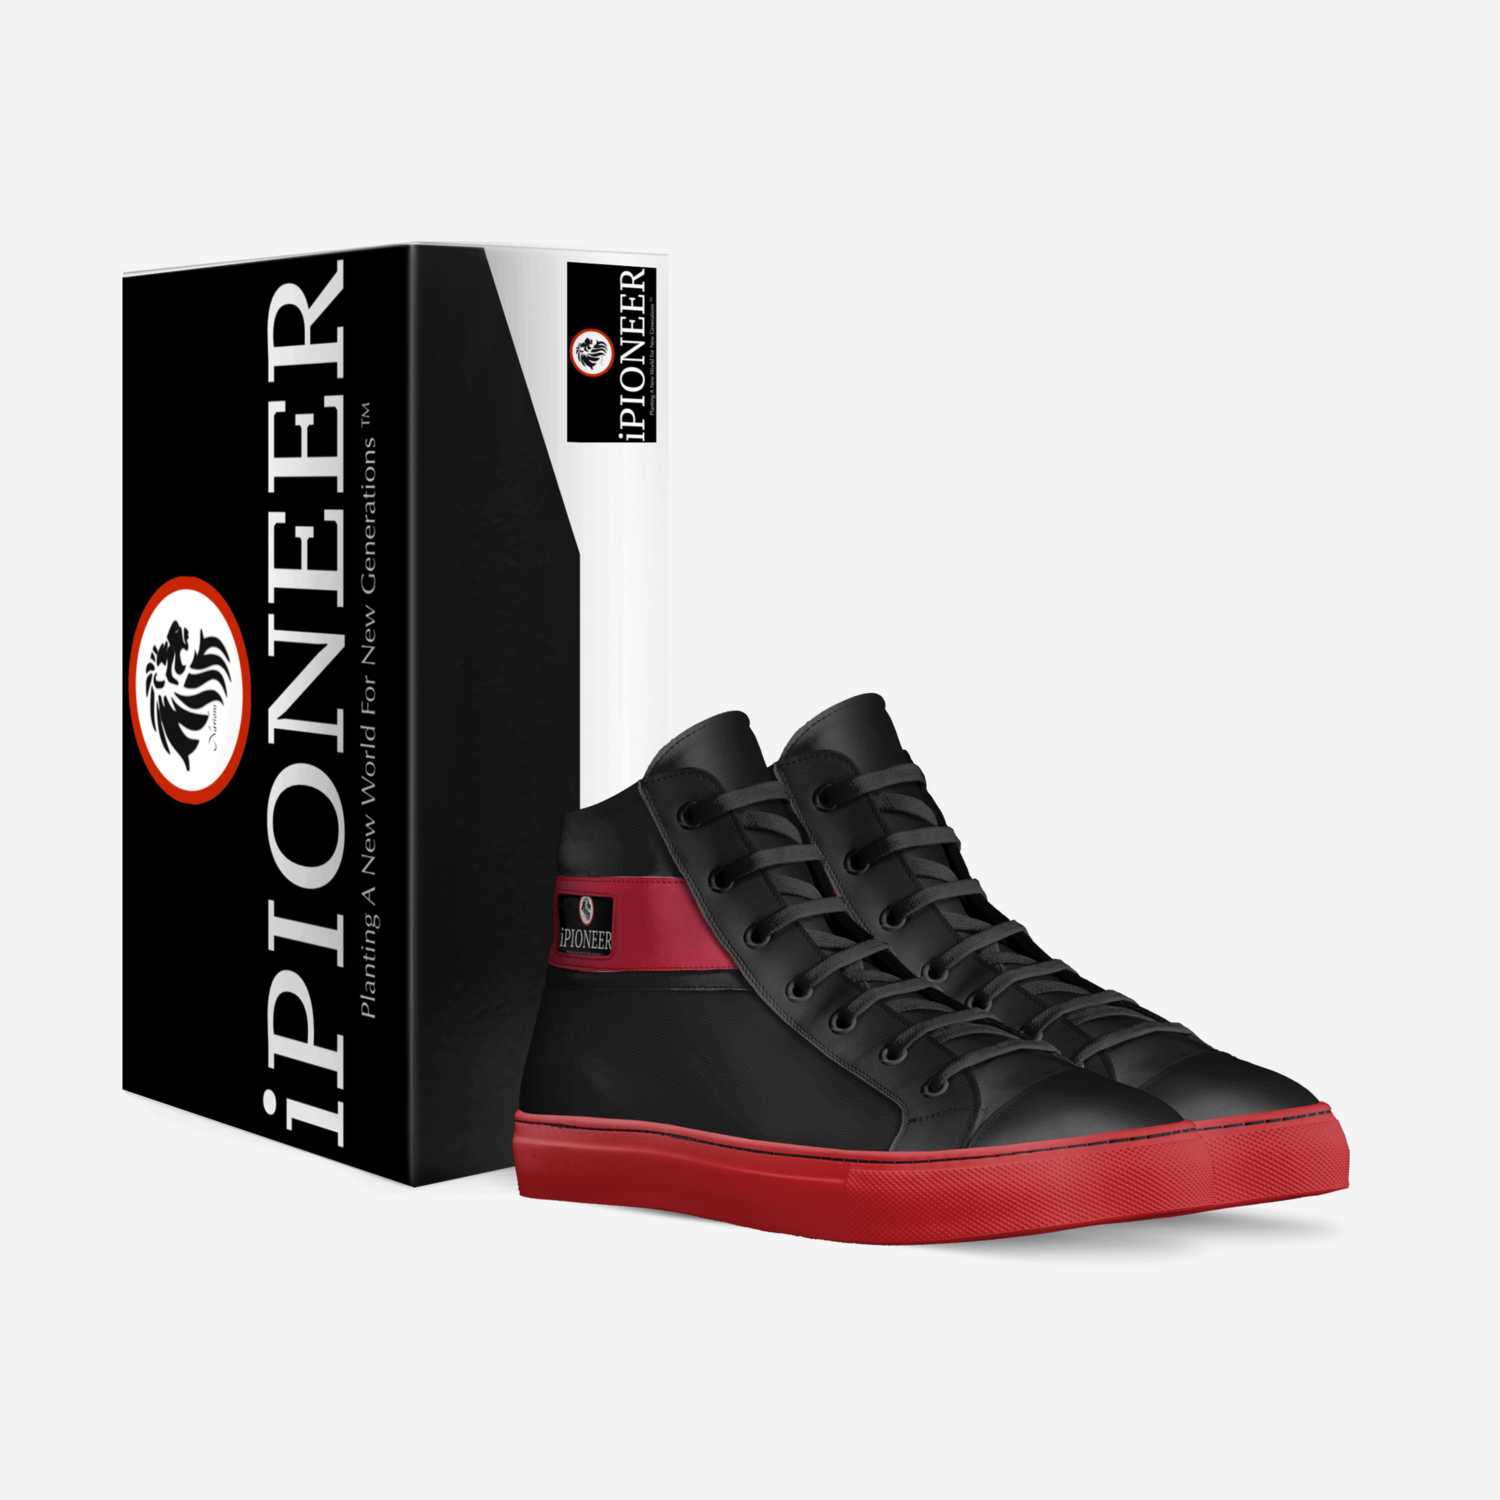 iPioneerMen custom made in Italy shoes by Marlon D. Hester Sr. | Box view